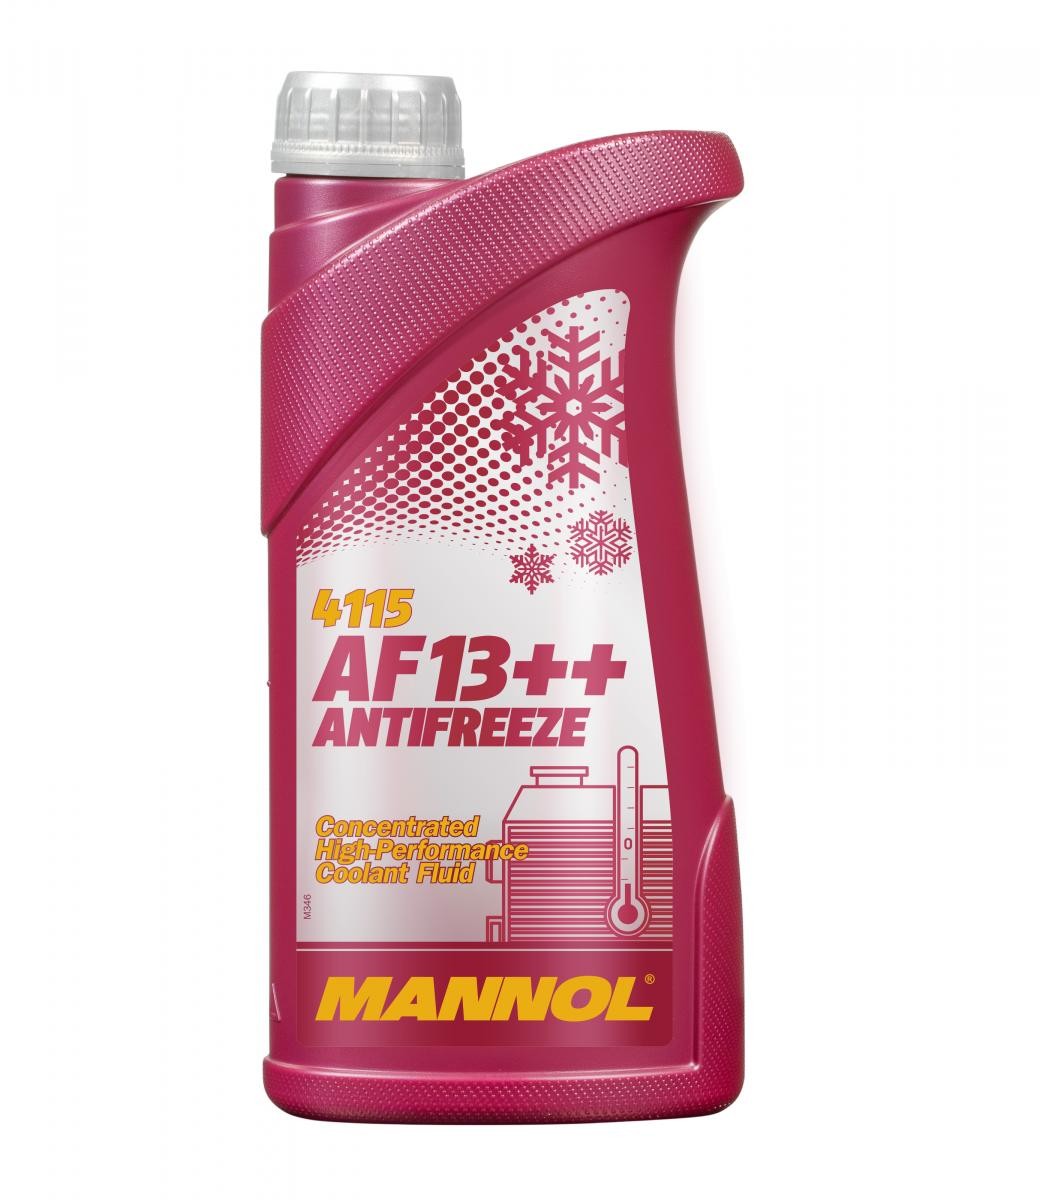 AMAZONAS 1600 Kühlmittel G12 Rot, 1l, -38(50/50) MANNOL AF13++, High-performance MN4115-1